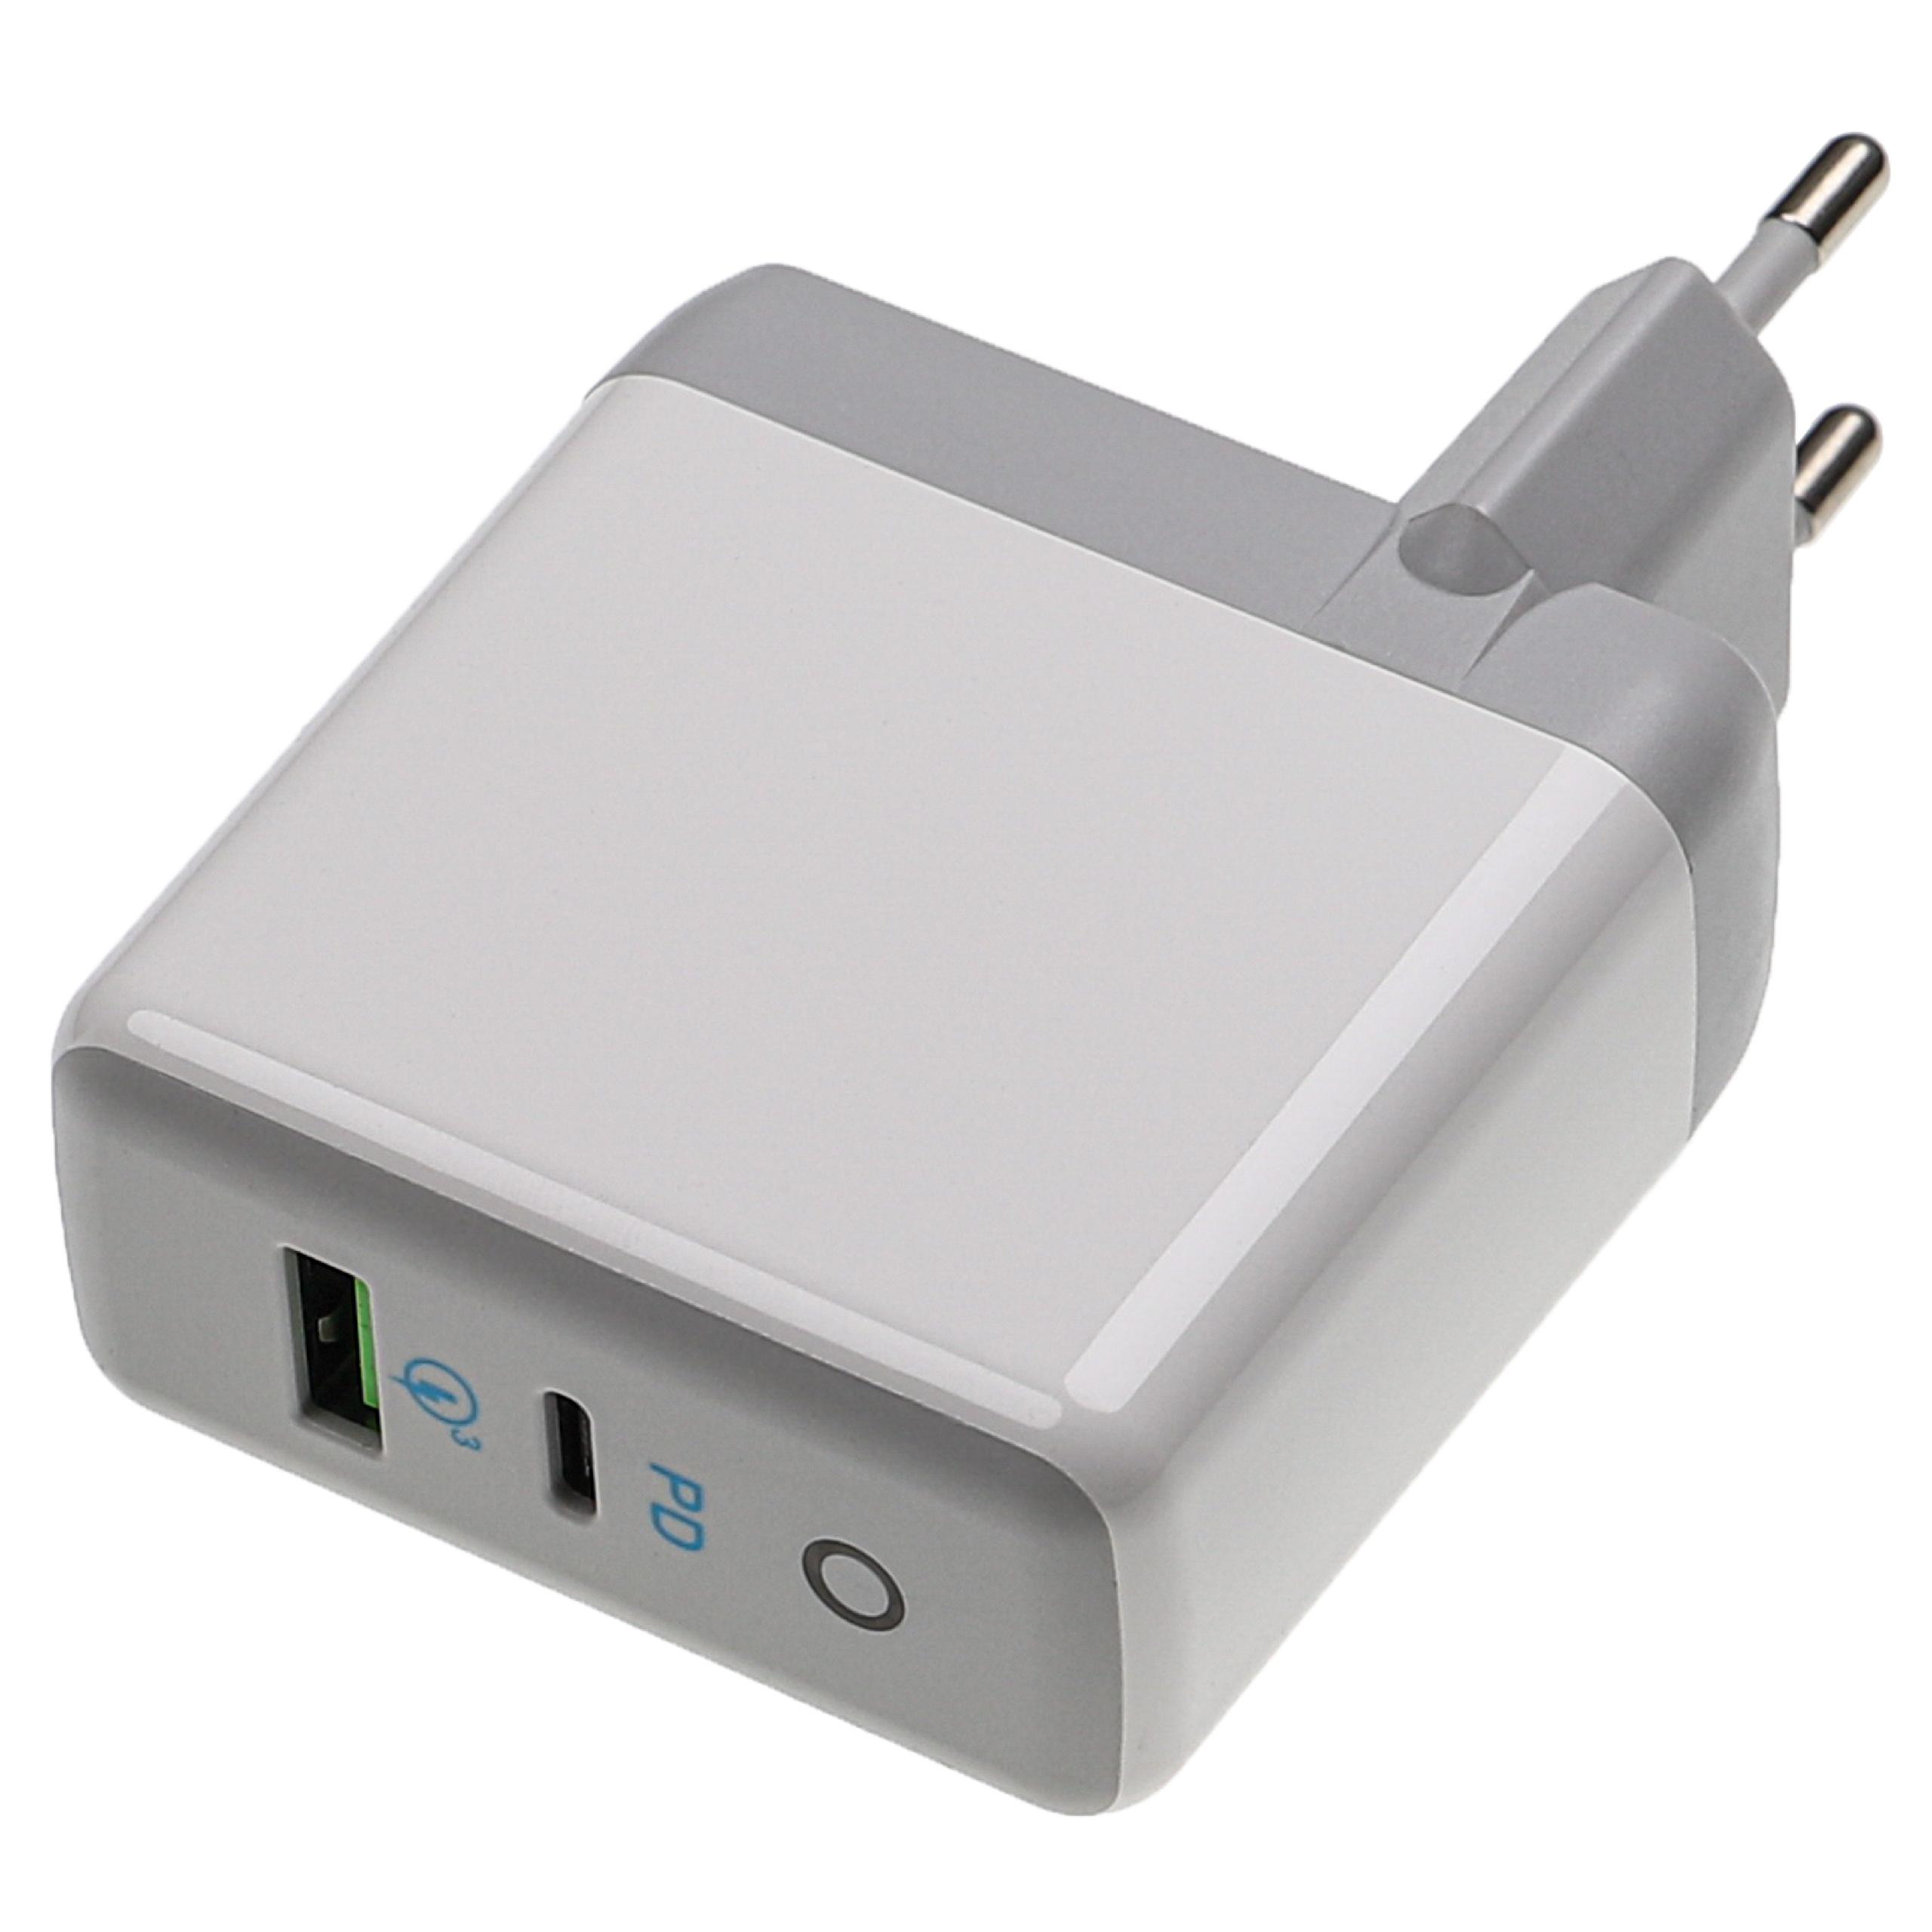 Alimentatore di rete USB C (2 porte) per cellulari, tablet - Caricabatterie USB, adattatore da9 / 12 / 5 V